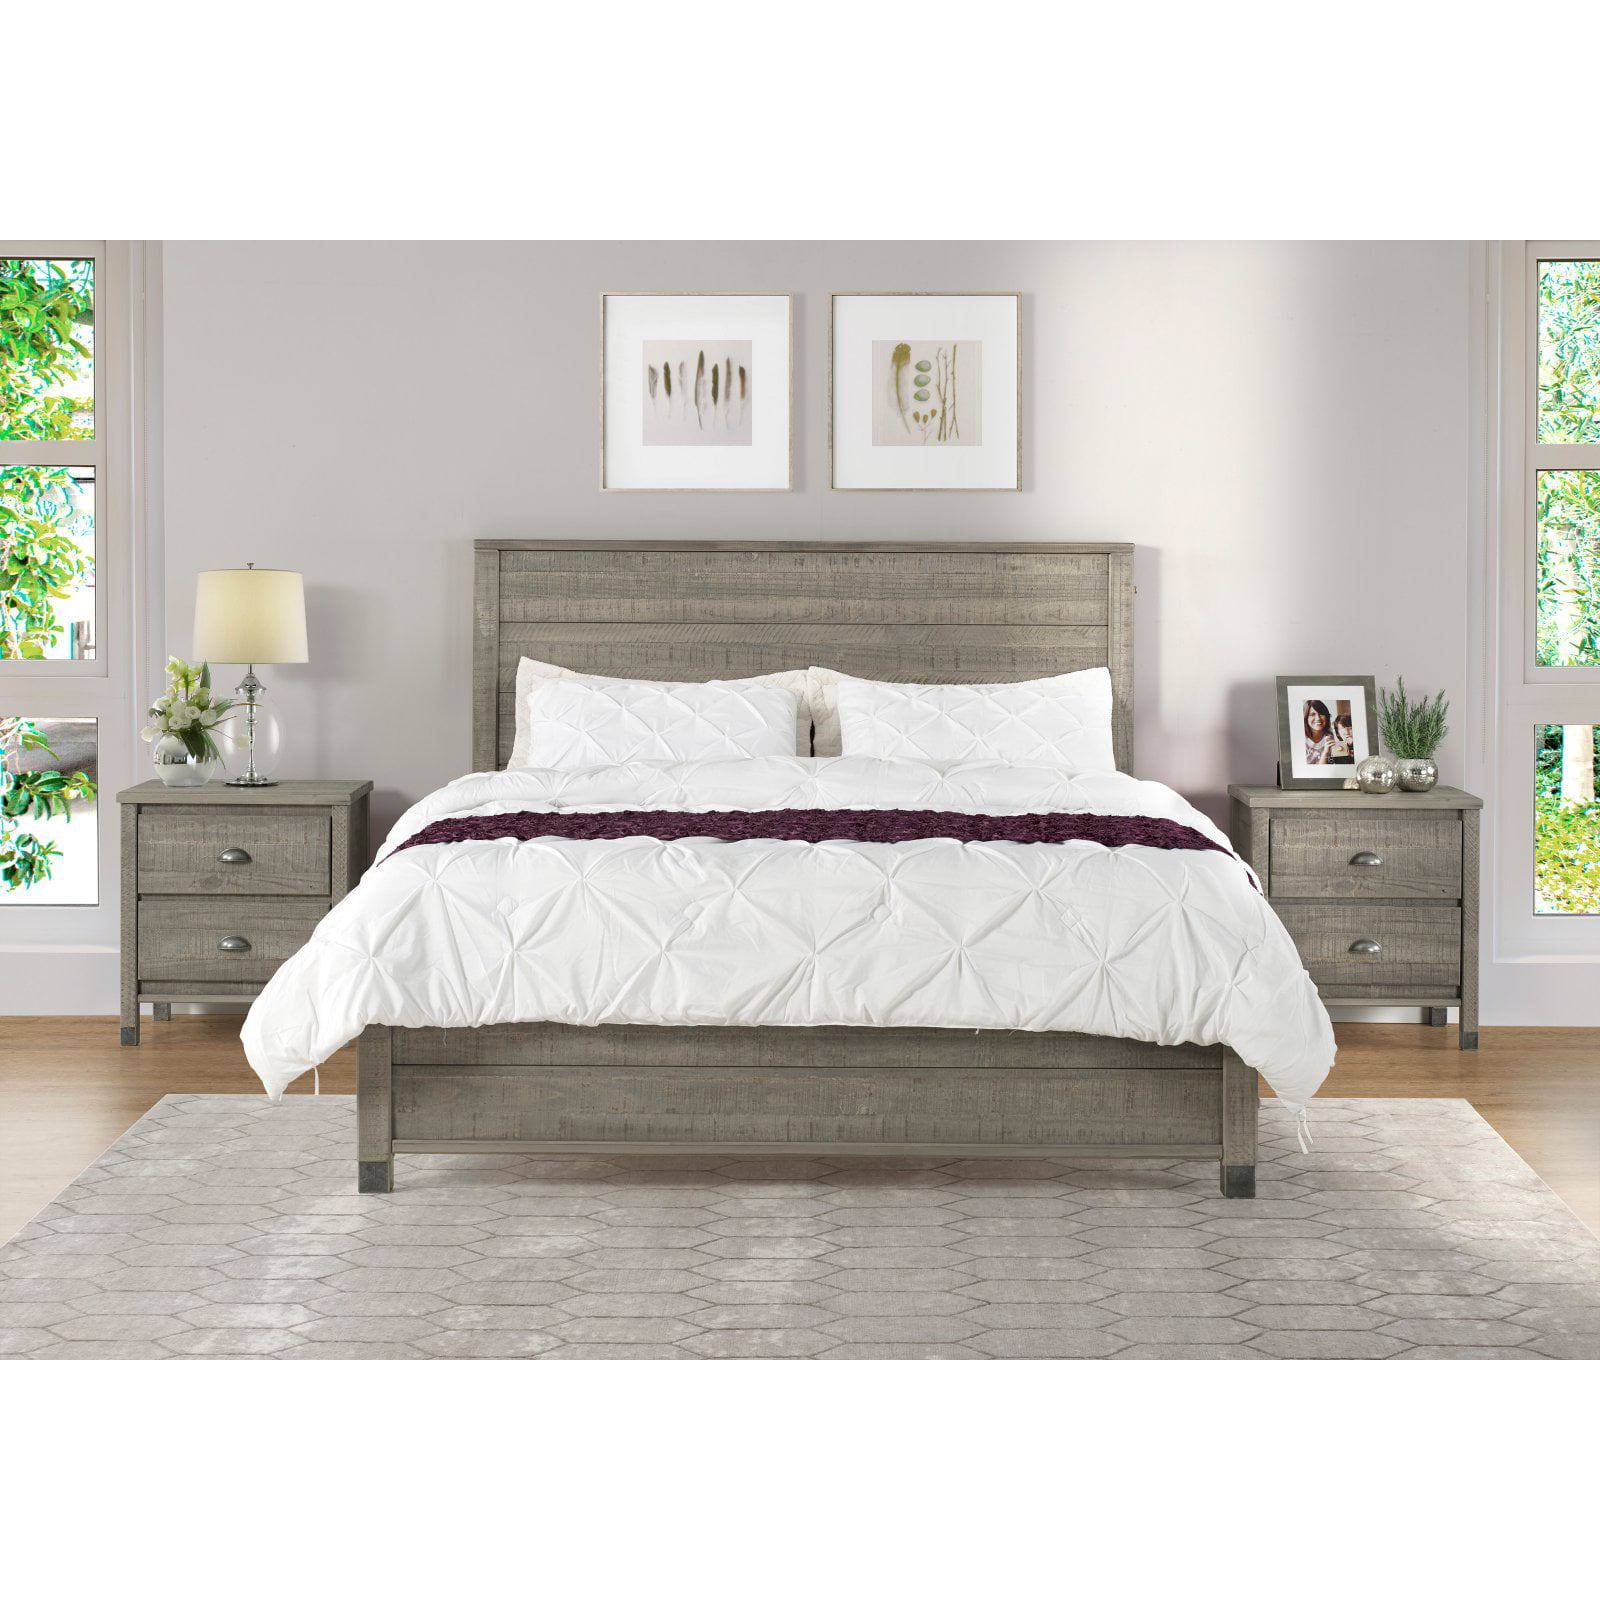 Vidalia Rustic Gray Wood Bed - KFROOMS